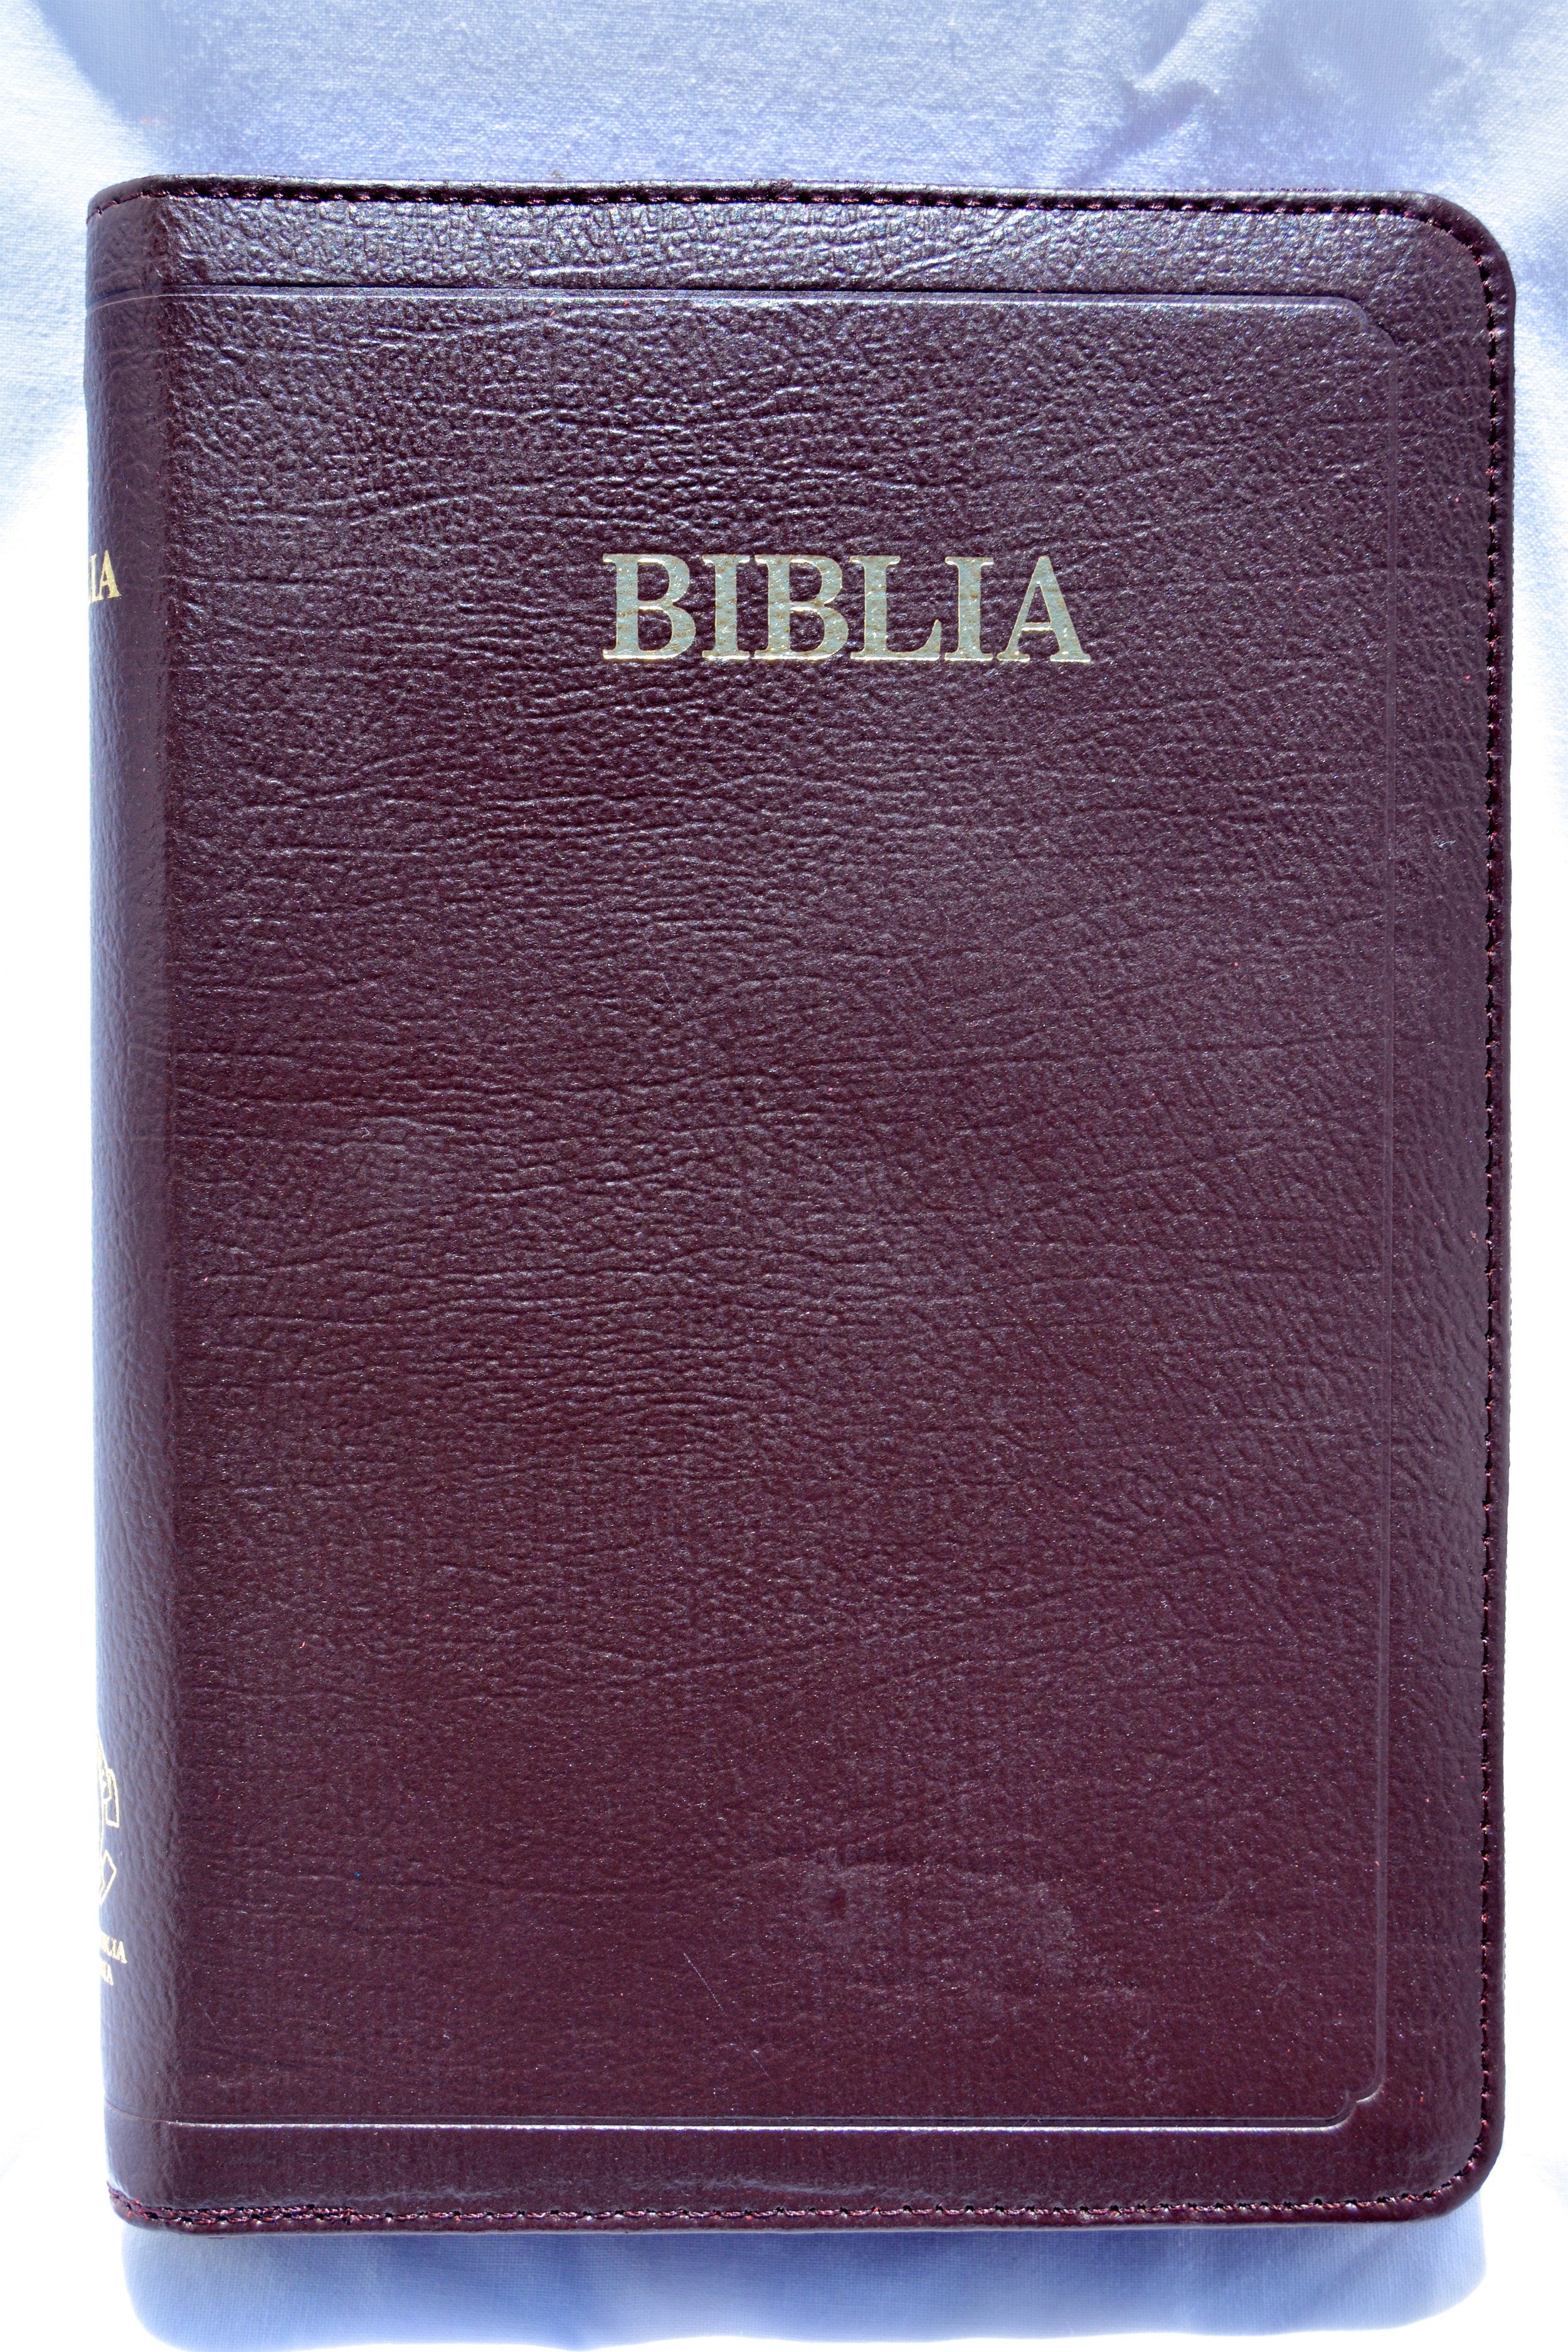 Biblia 52 brown Zip.jpg